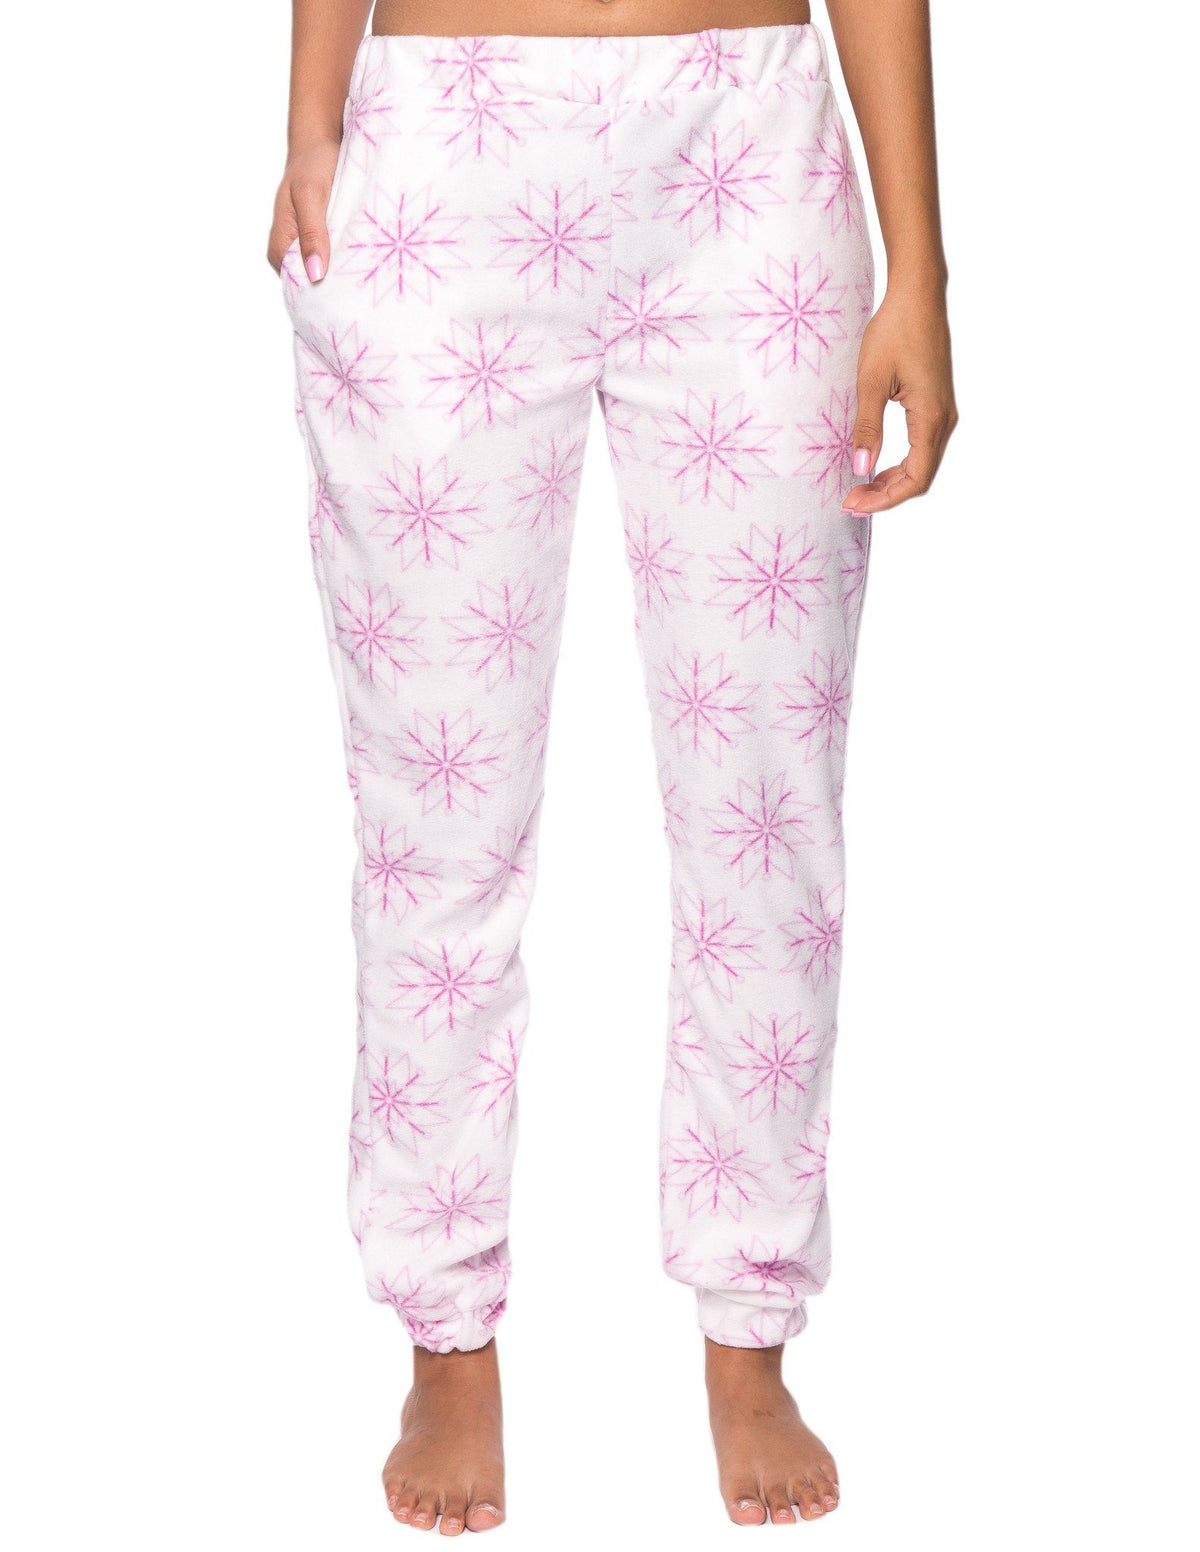 Women's Premium Microfleece Jogger Lounge Pant - Snowflakes White/Purple